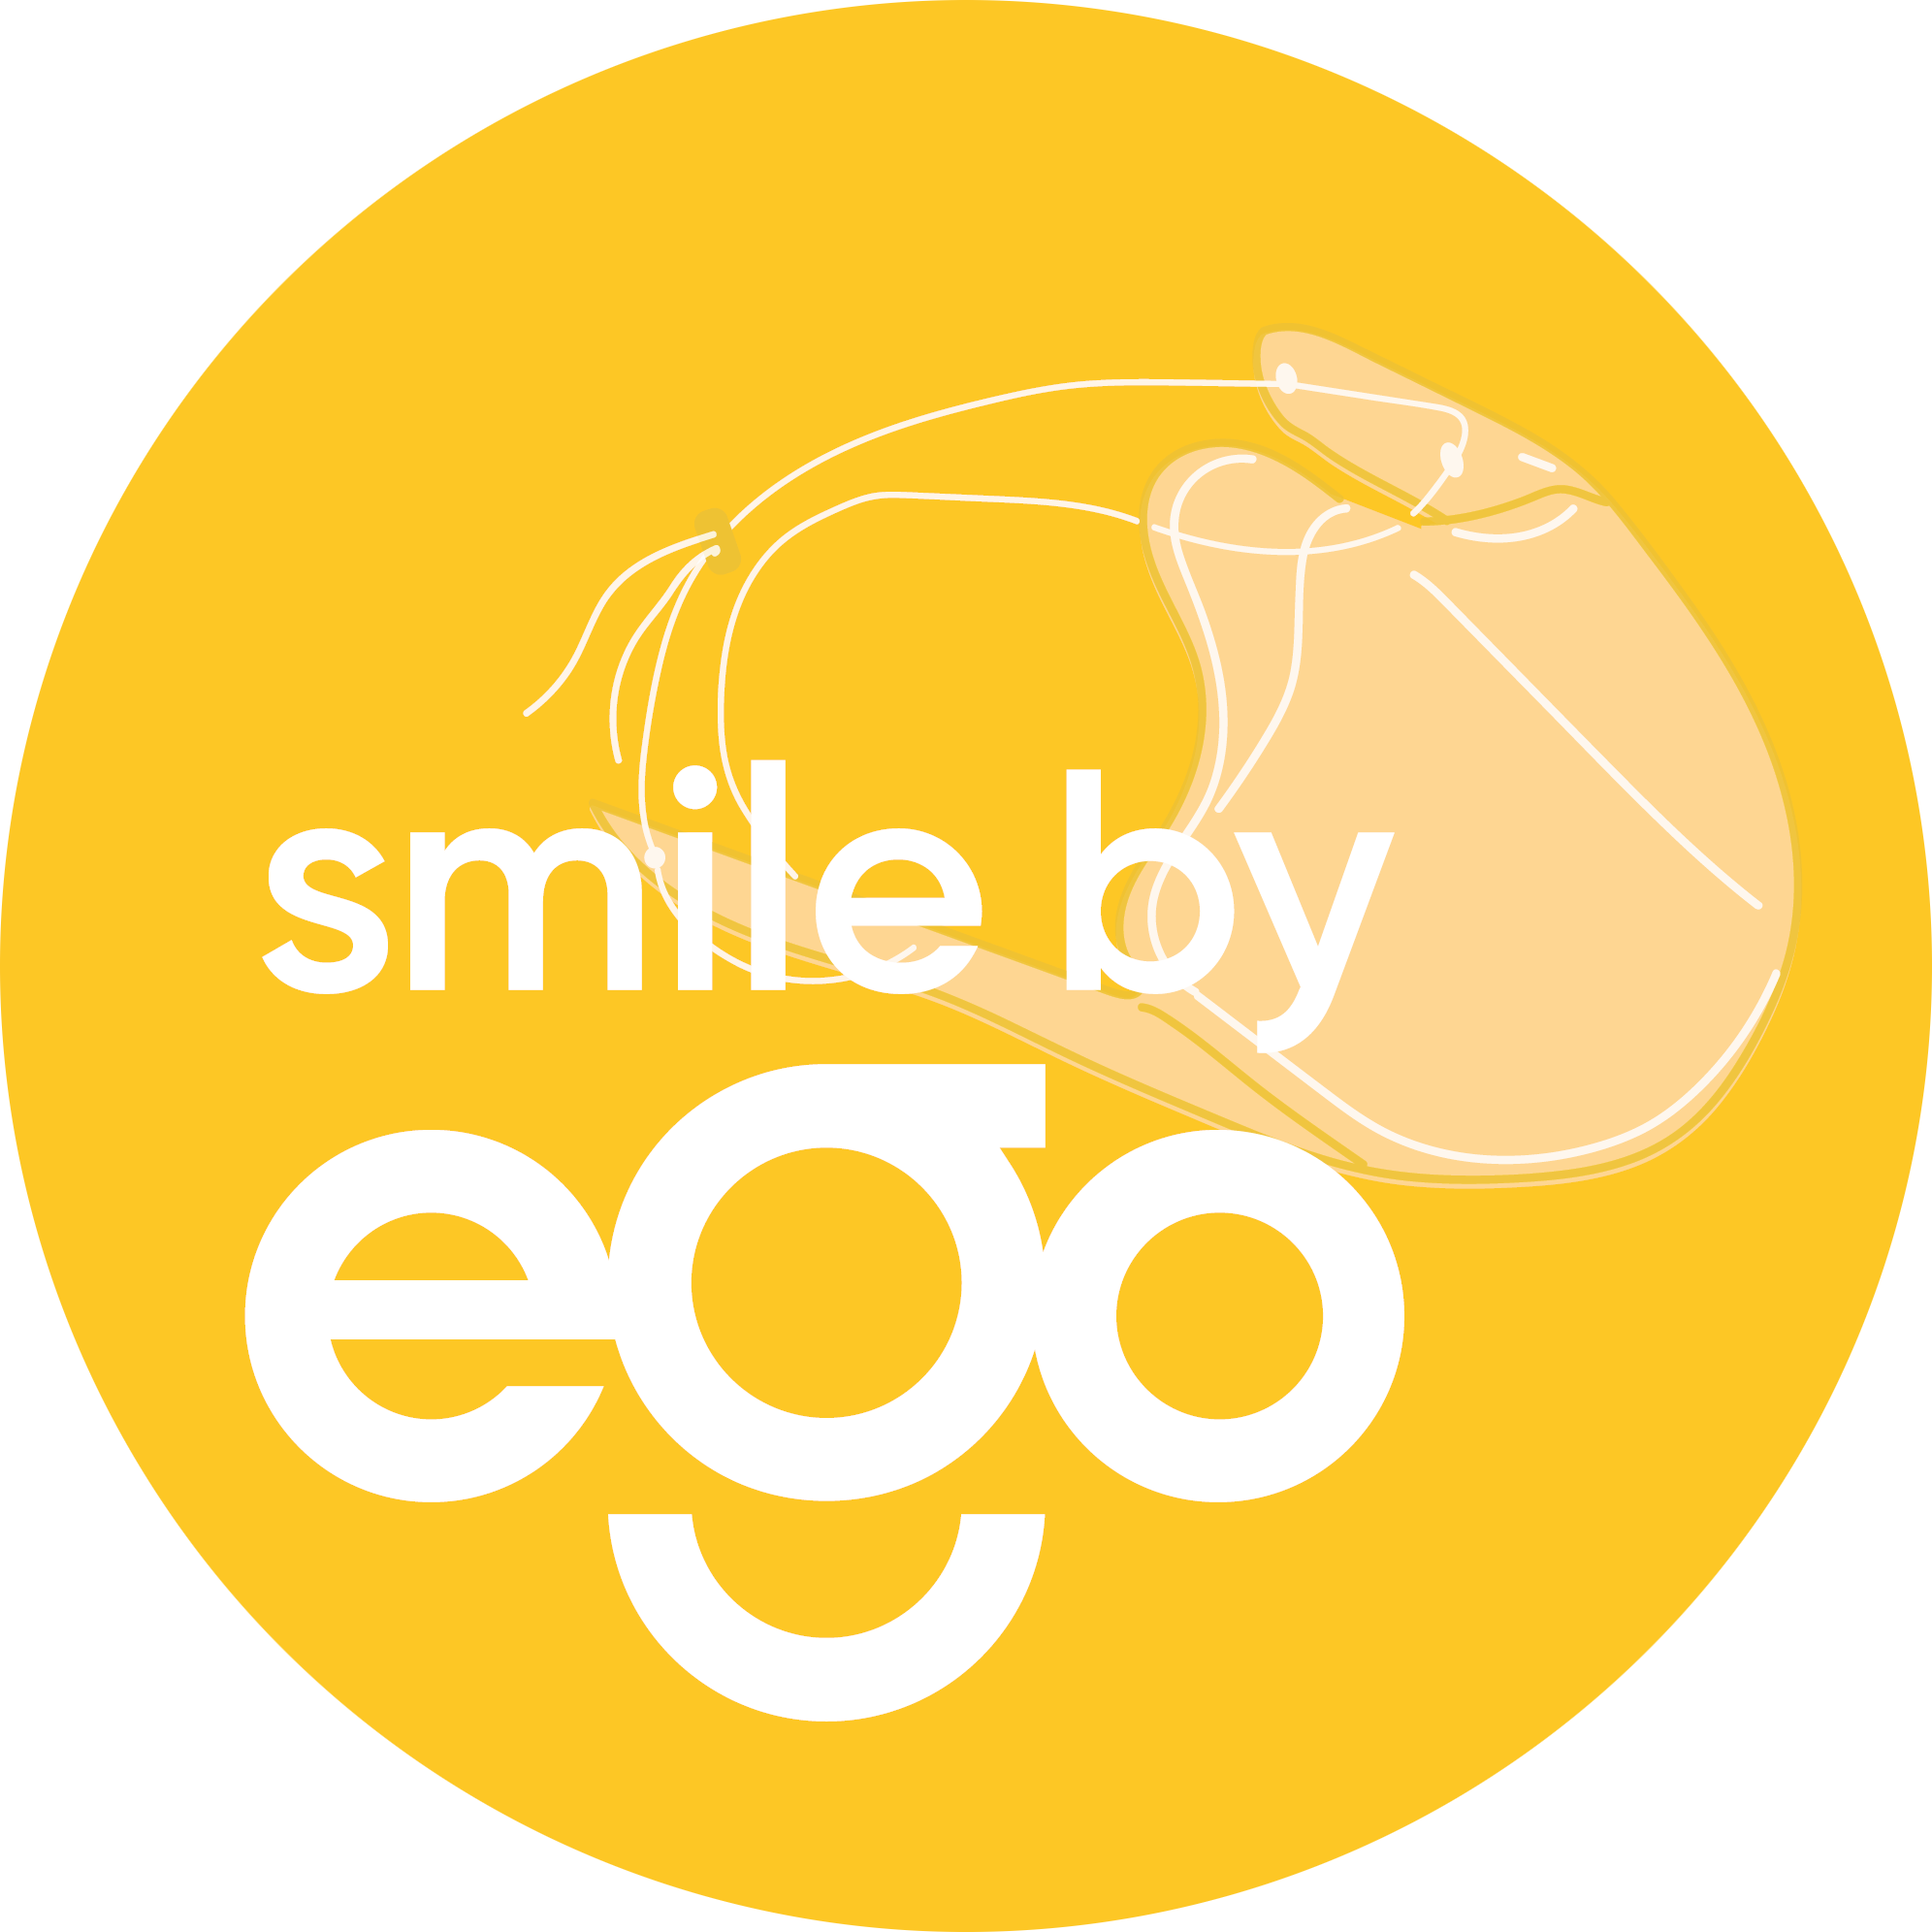 (c) Smile-by-ego.com